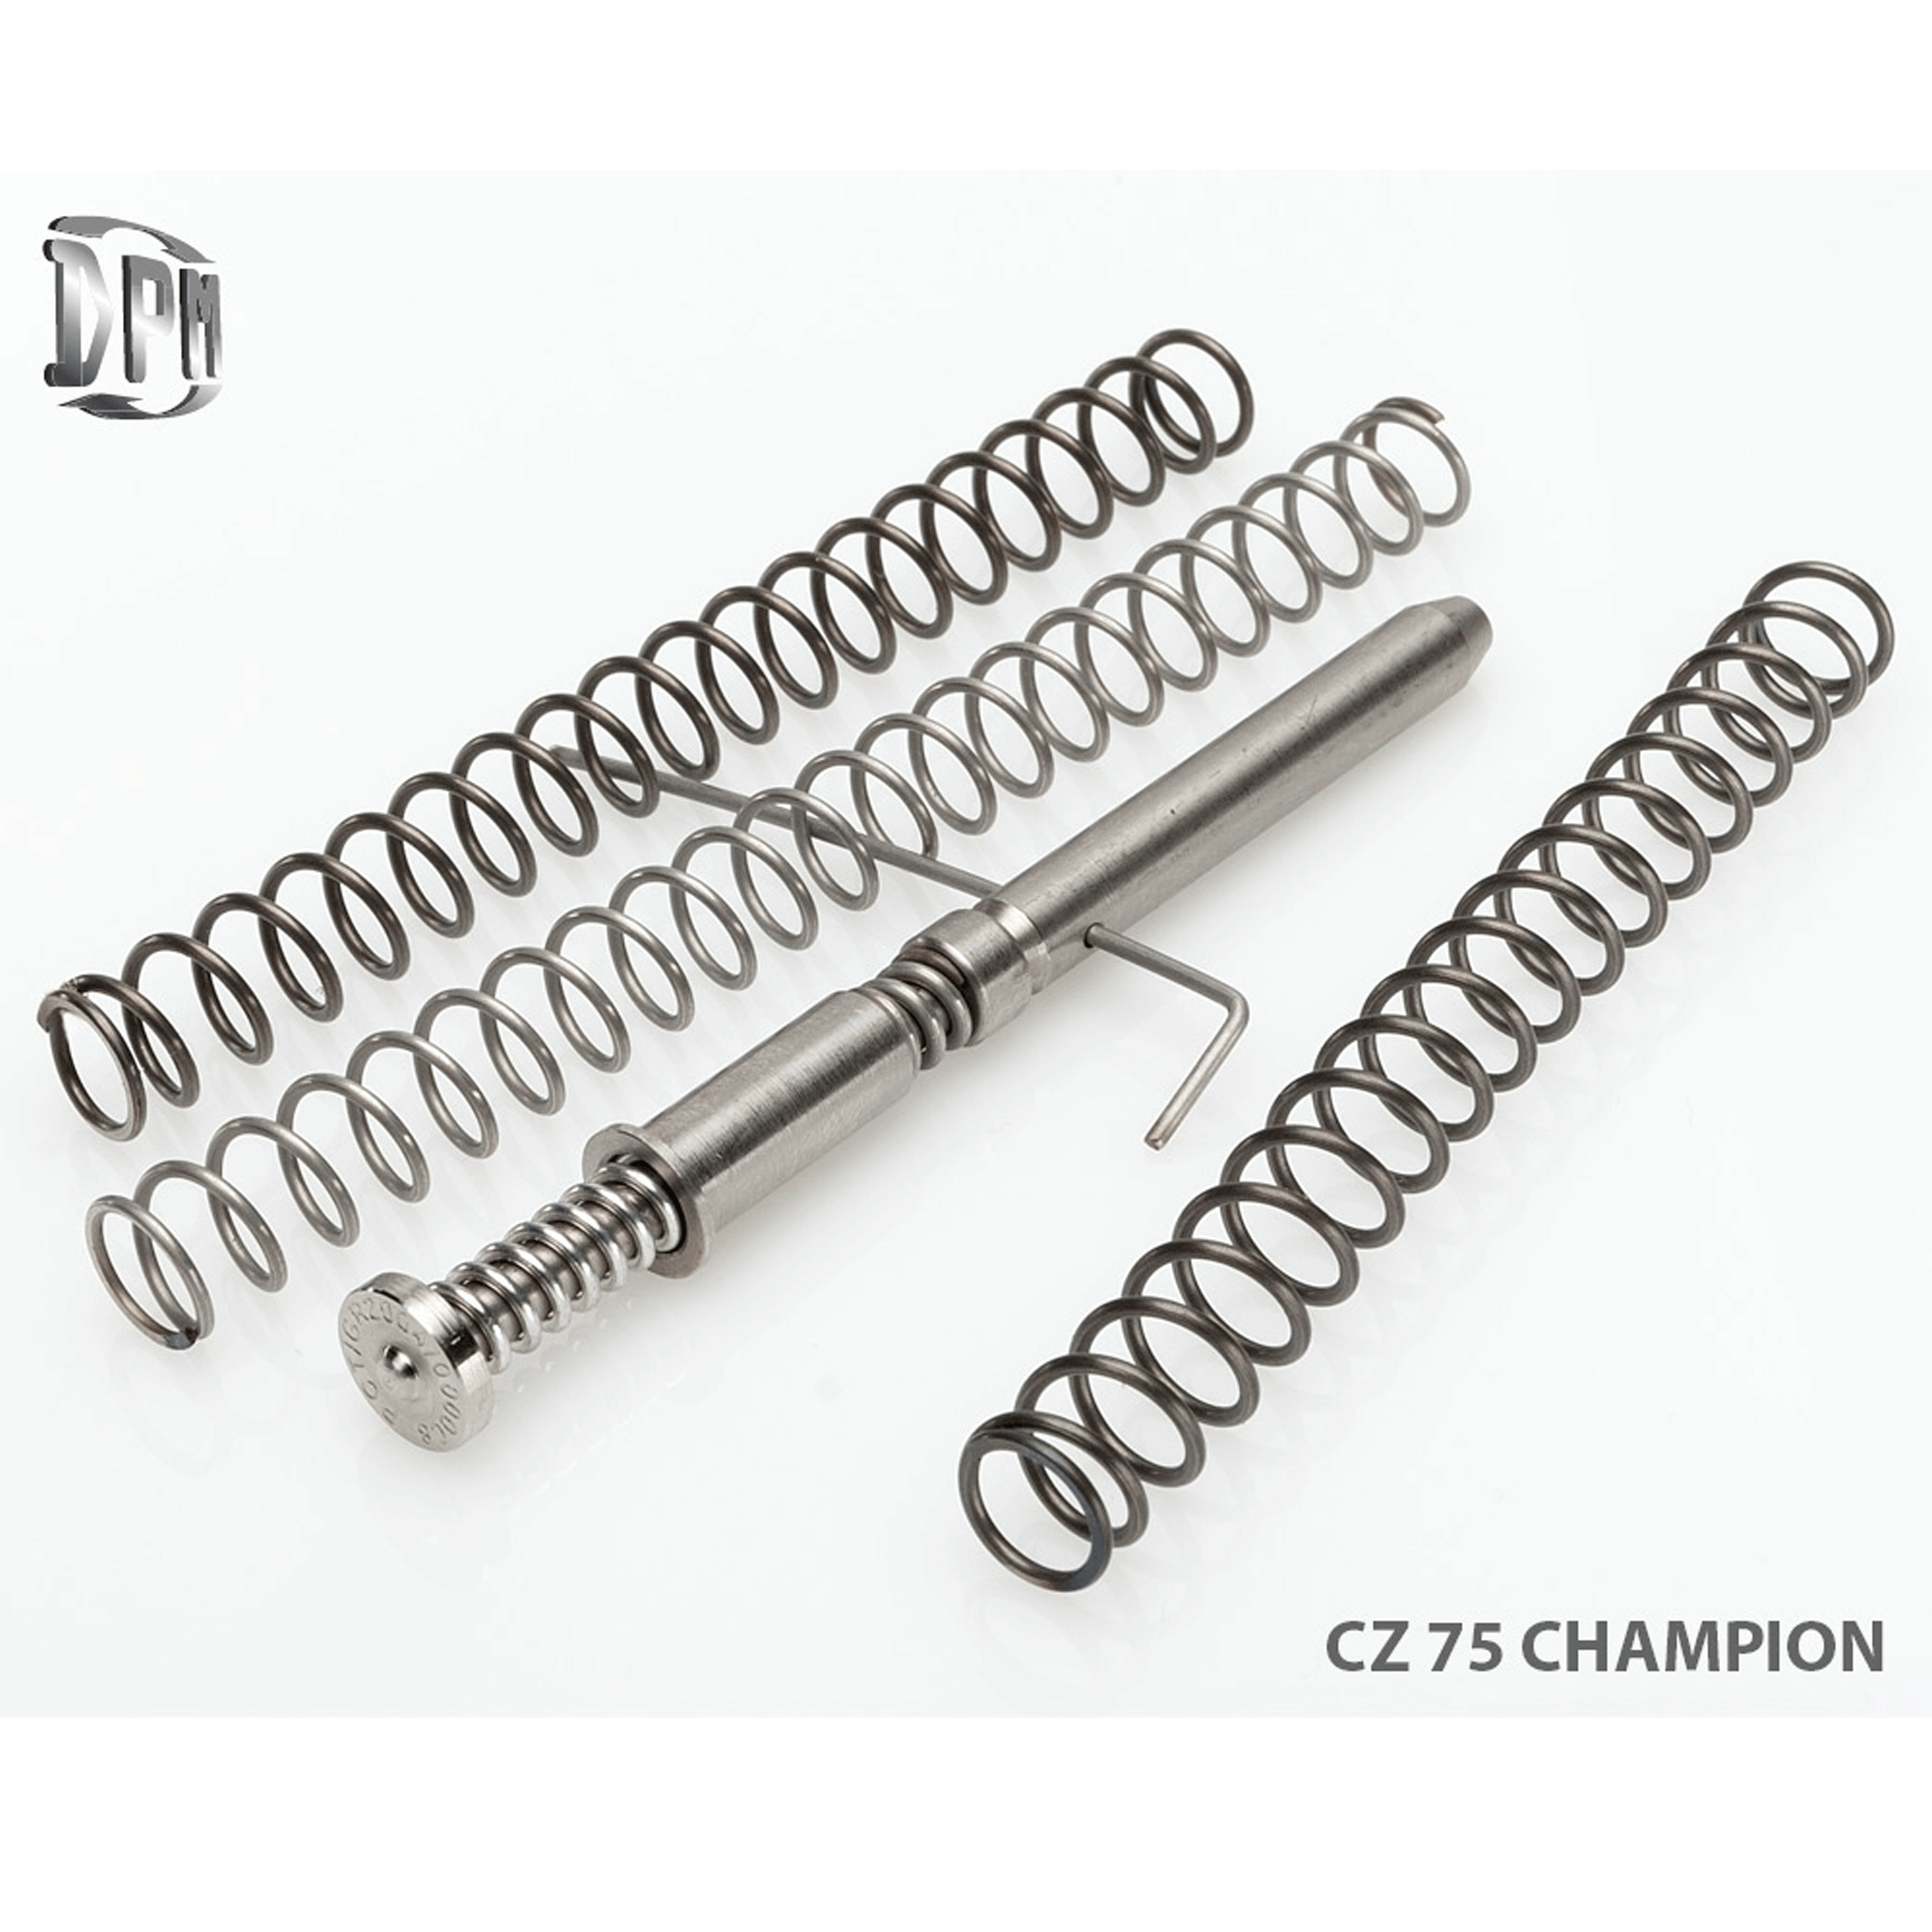 CZ 75 Champion - 9mm / .40 S&W